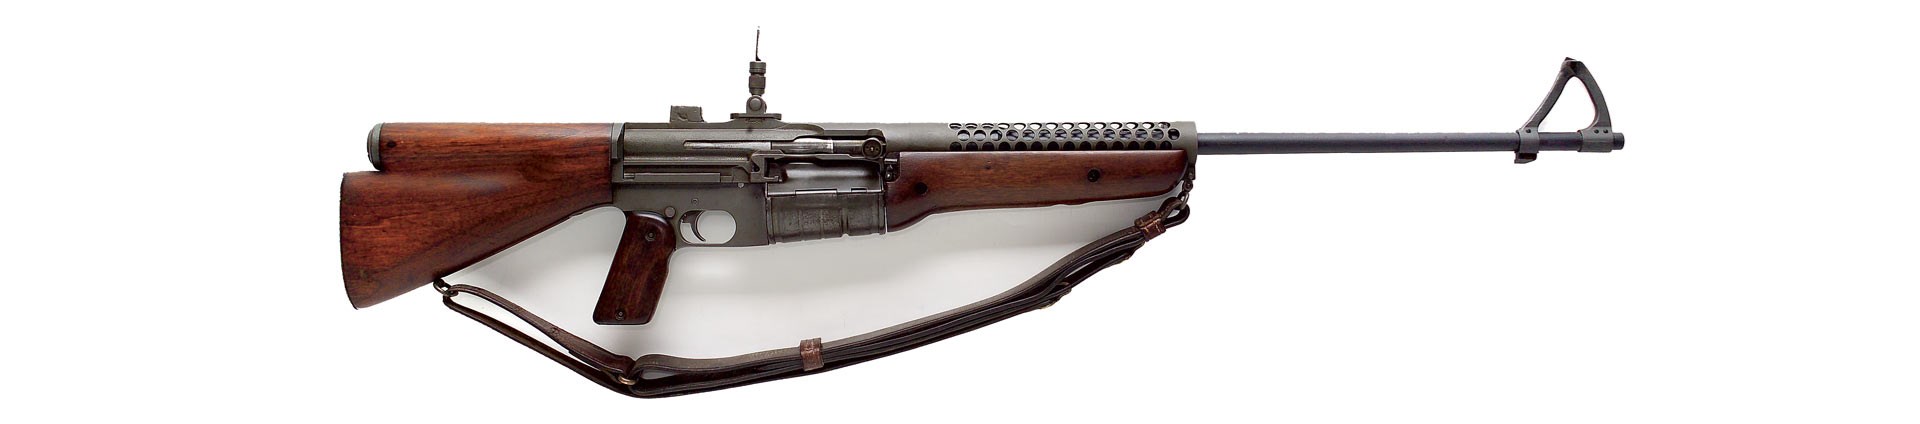 Johnson Auto carbine on white rifle gun sling wood steel